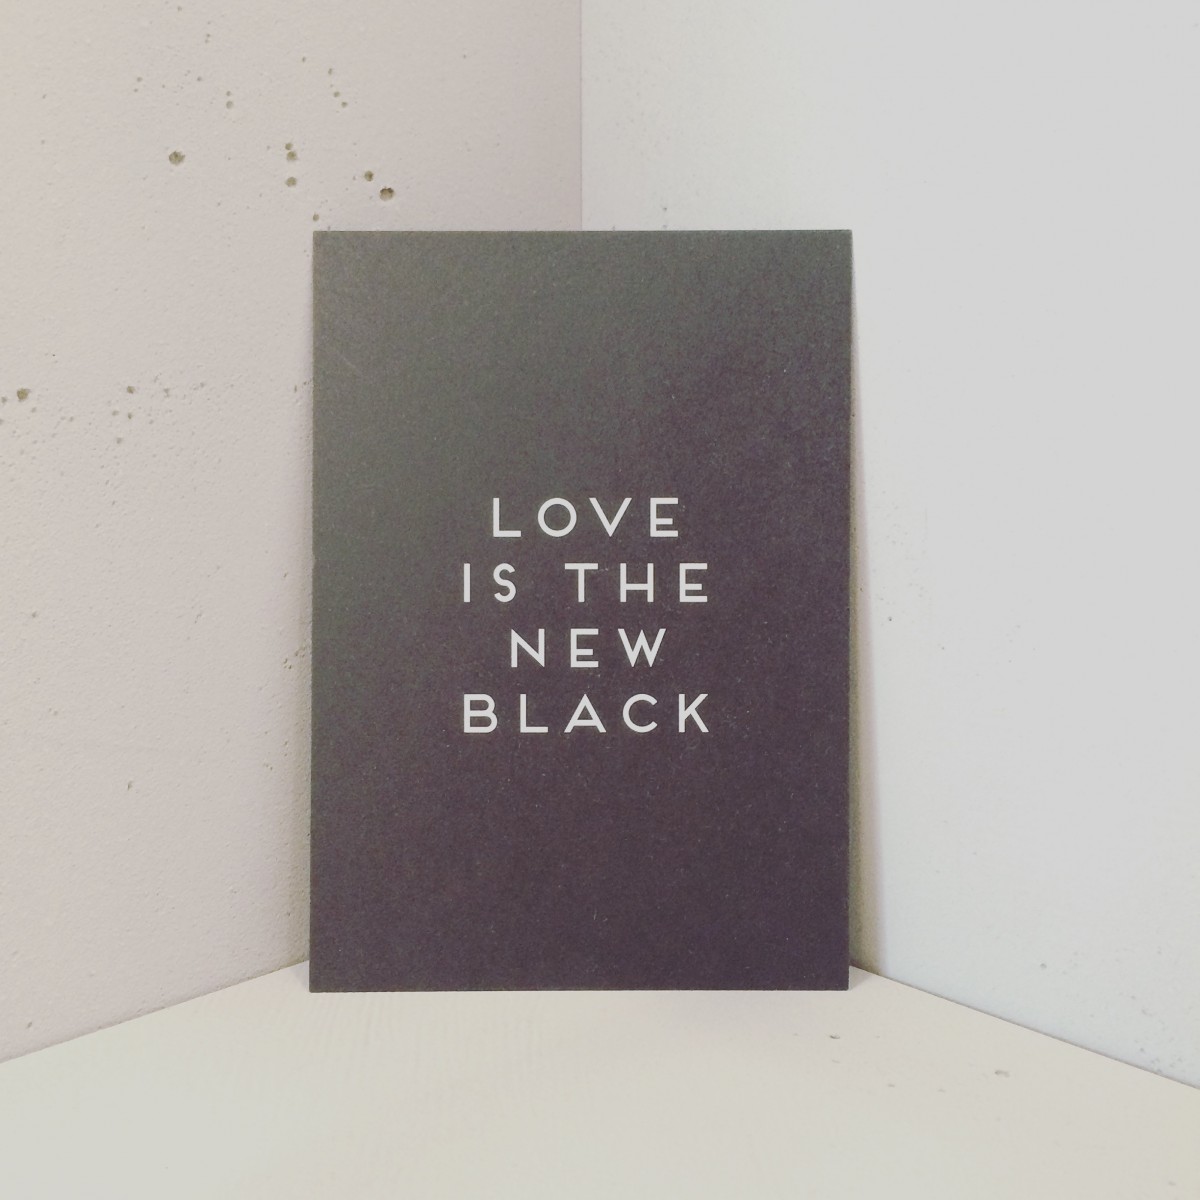 Postkarten-Set "Love is the new black"